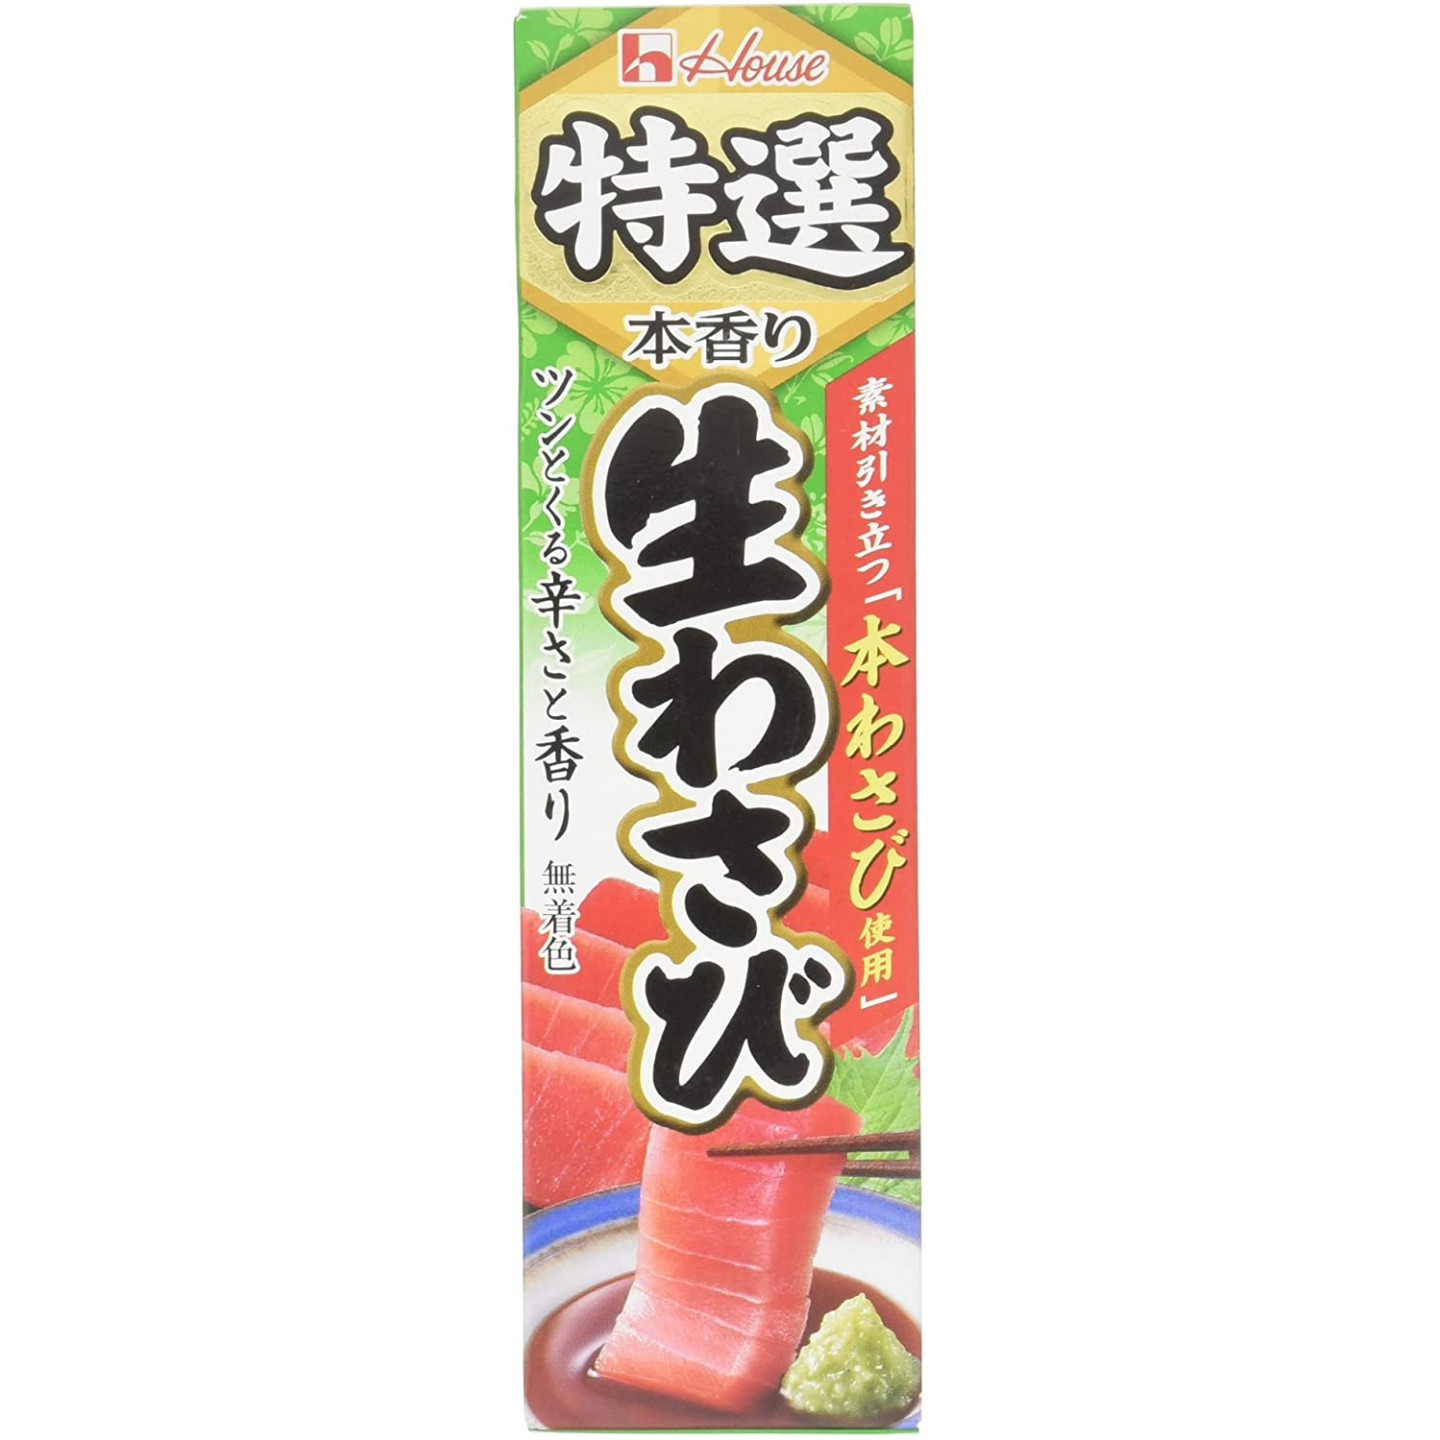 https://cookingsan.com/654-product_hd/house-foods-premium-wasabi-42g.jpg